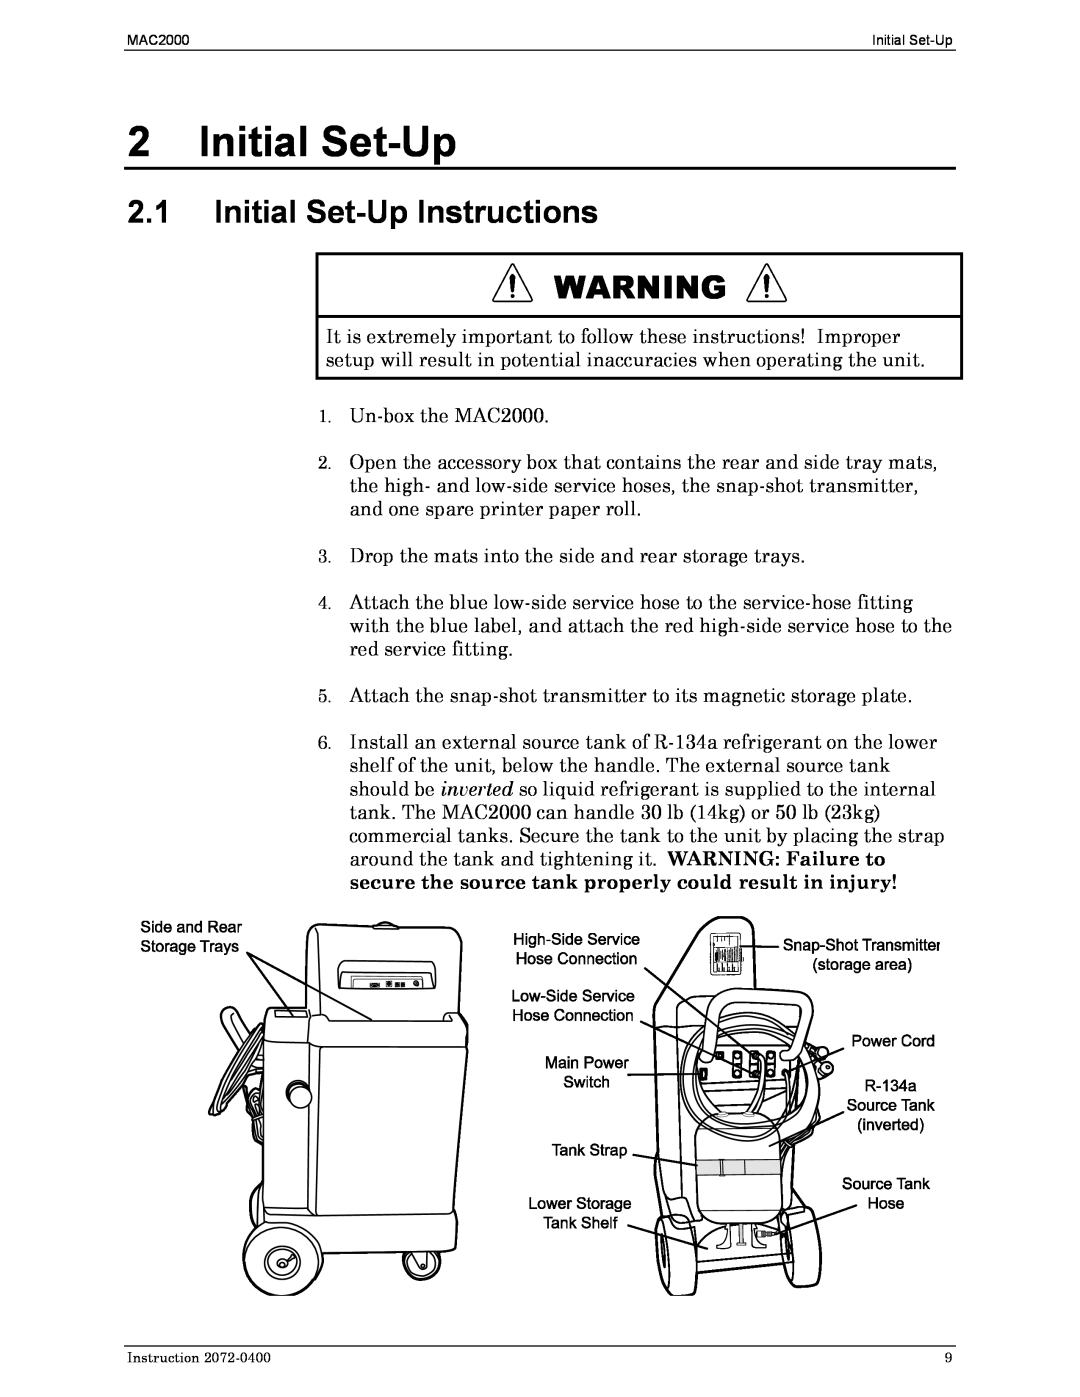 Bacharach 2072-0400 manual 2.1Initial Set-UpInstructions 